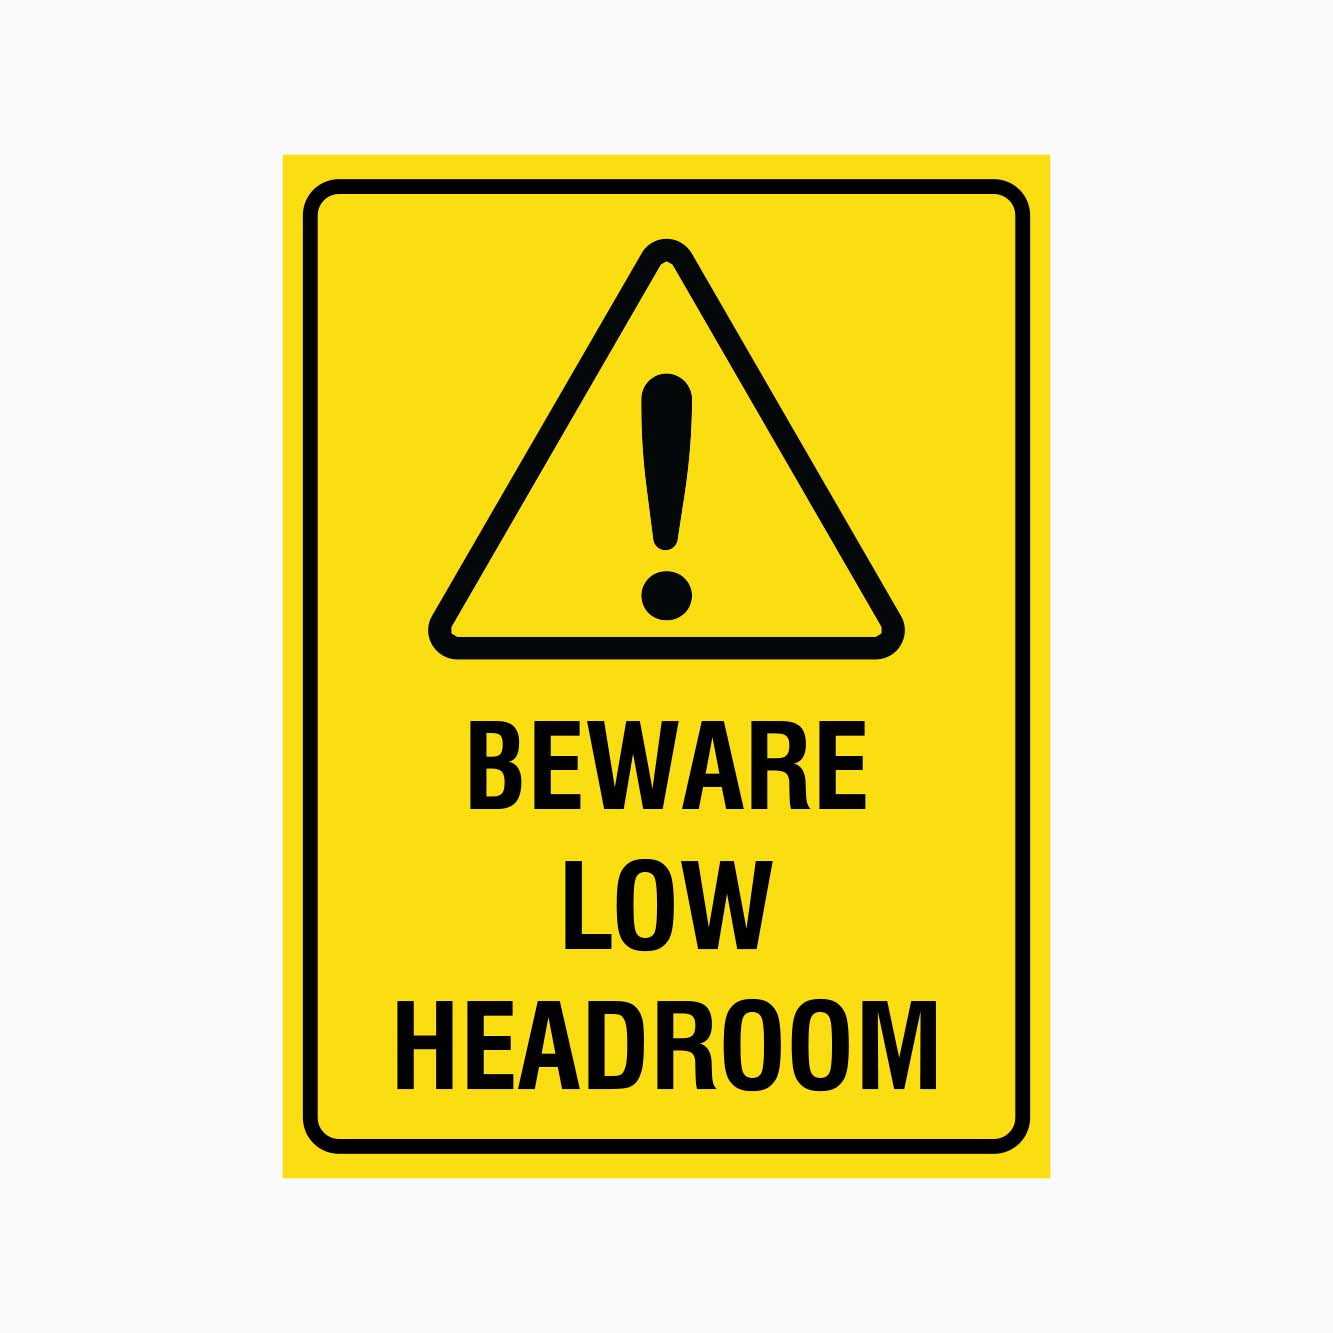 BEWARE LOW HEADROOM SIGN - GET SIGNS